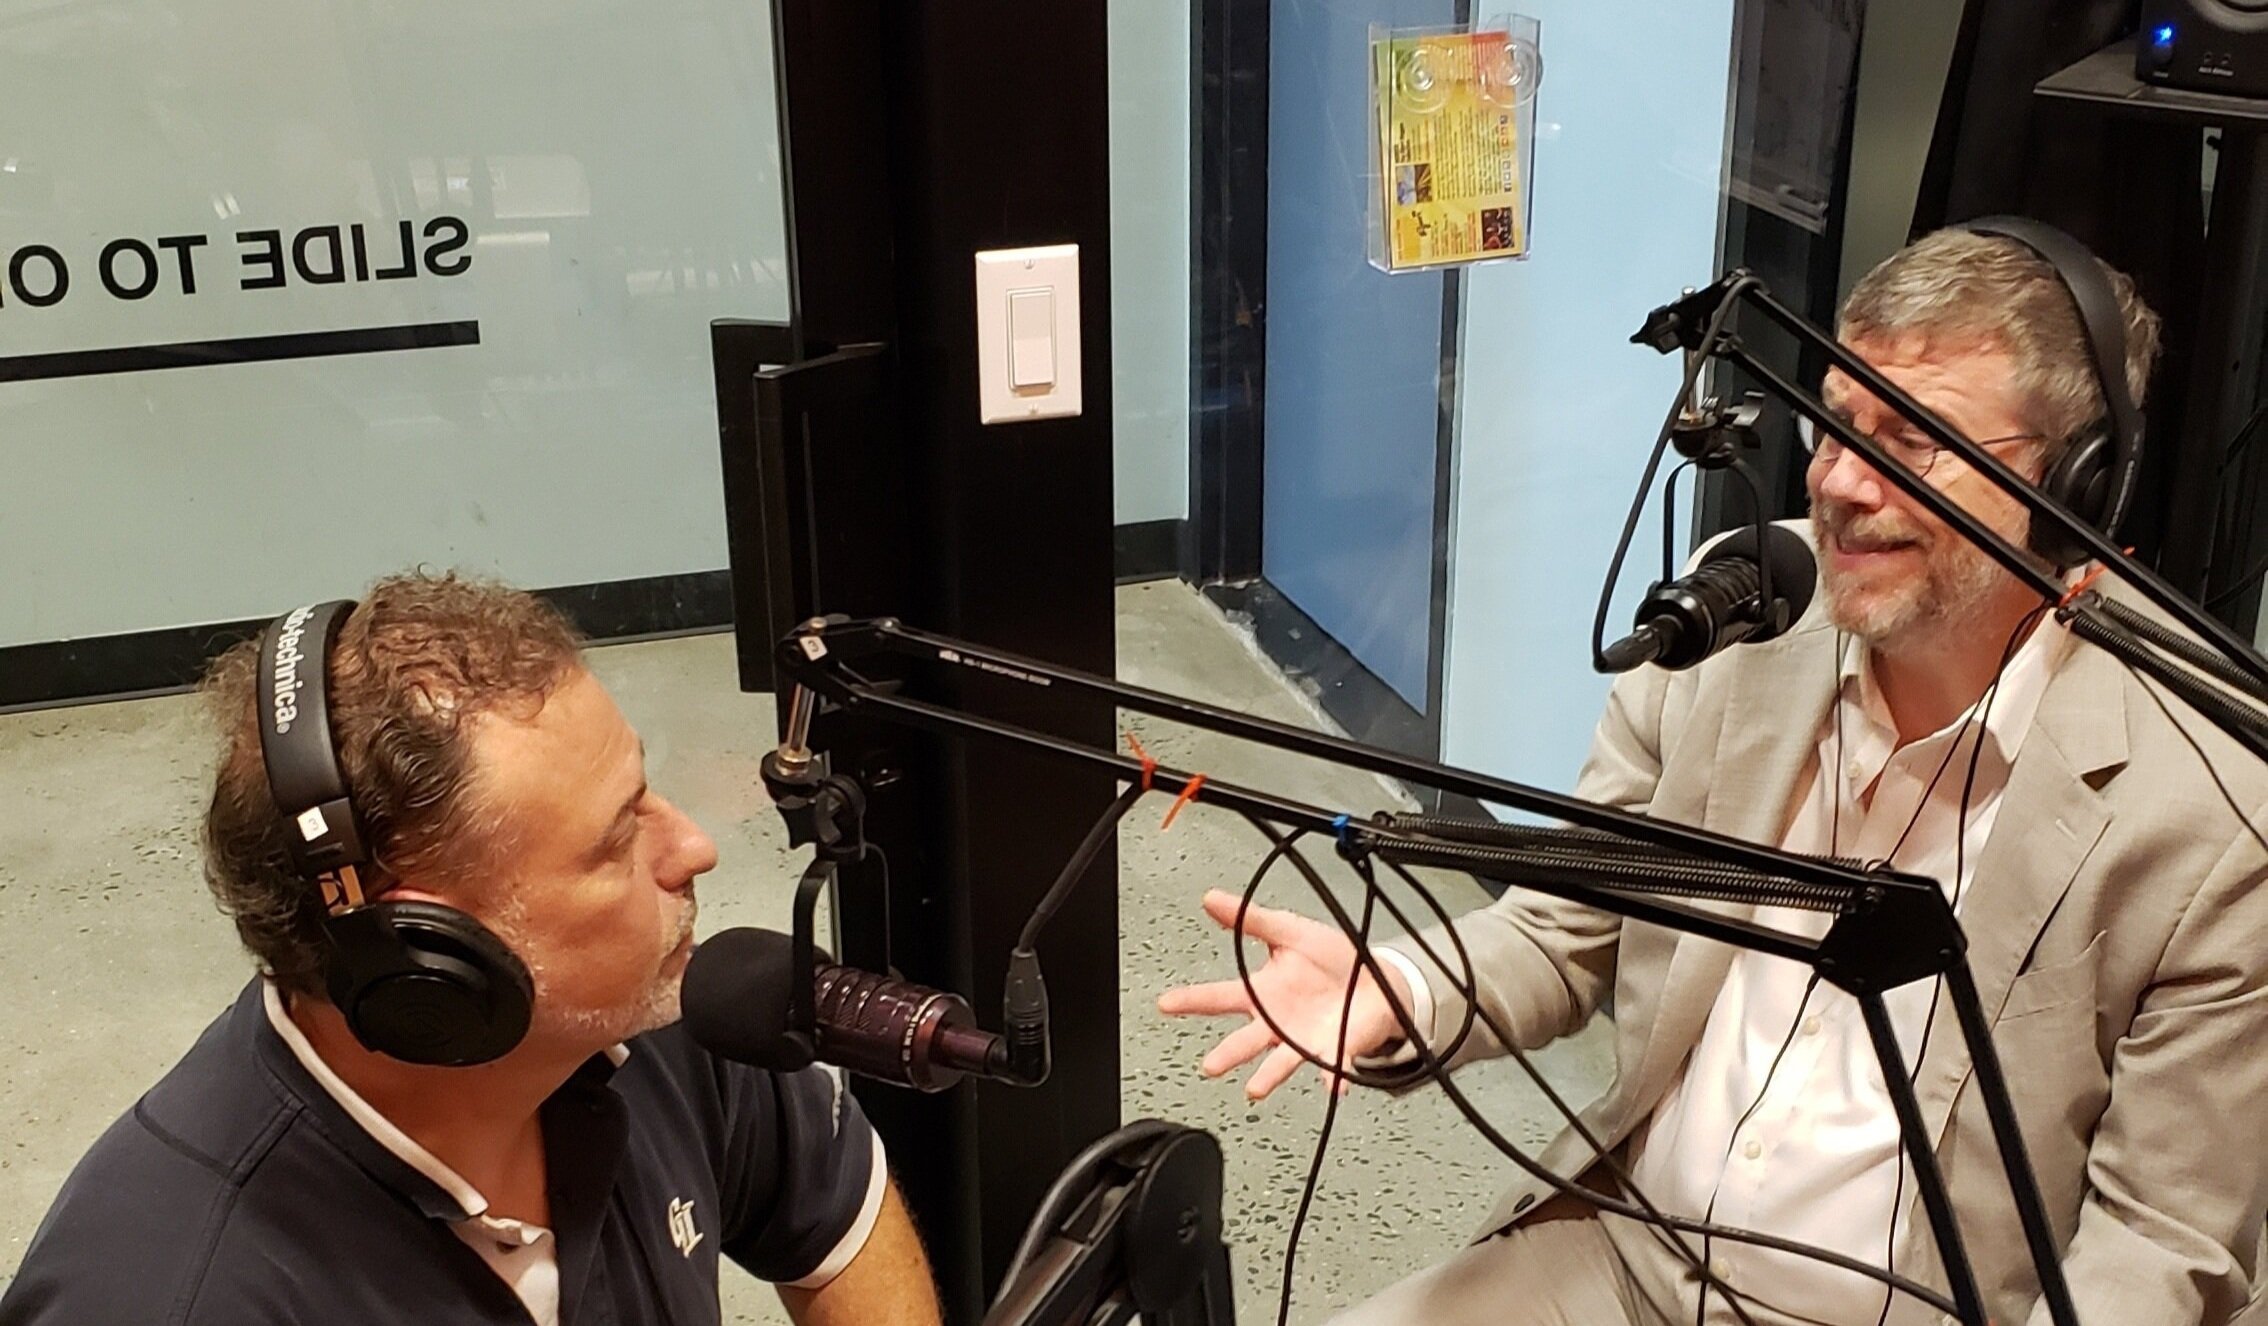 Jim and Gregg in the podcast studio.